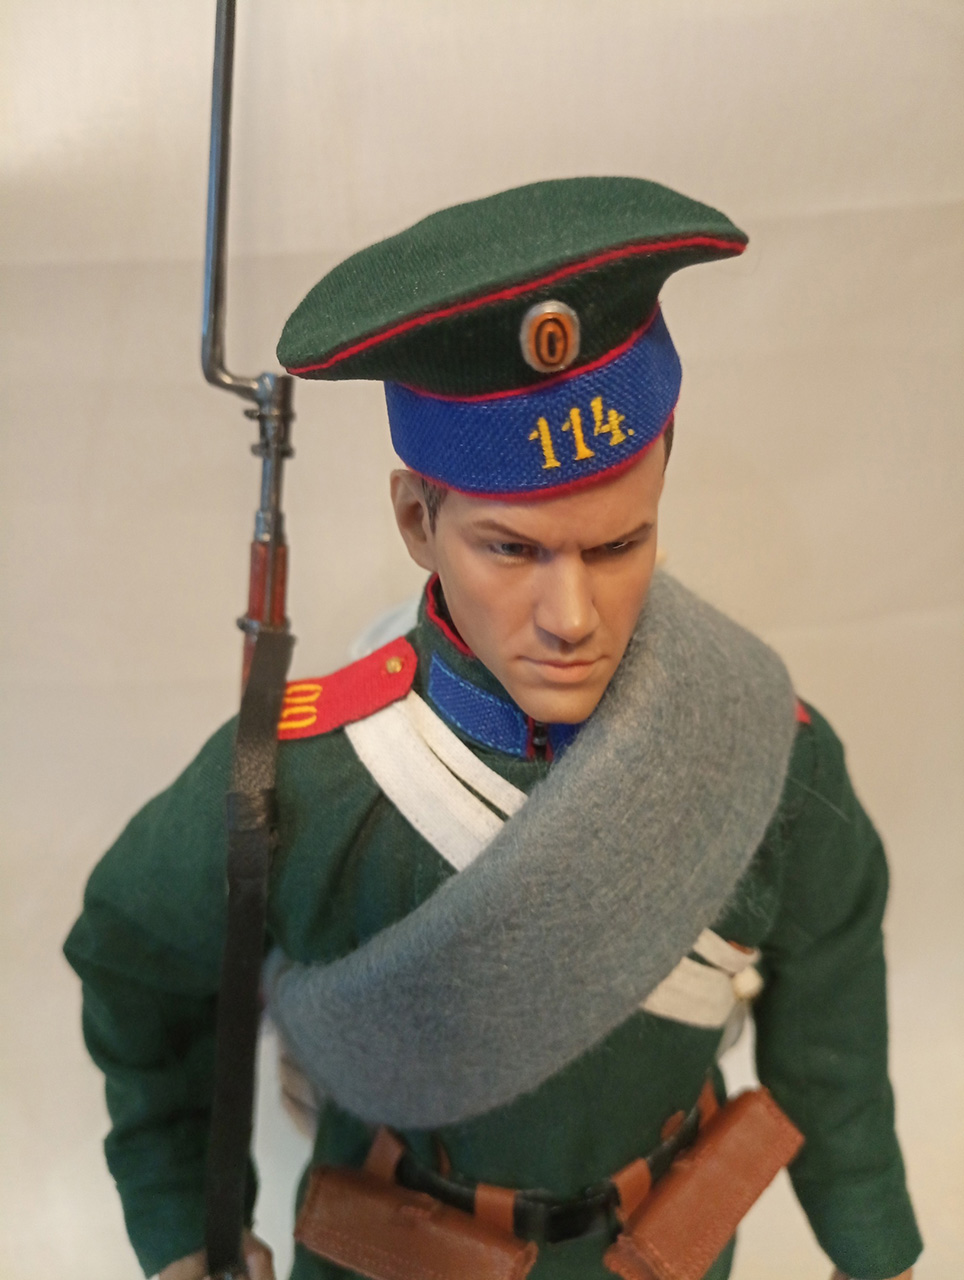 Figures: Soldier, 114th regt., 1881-88, photo #5